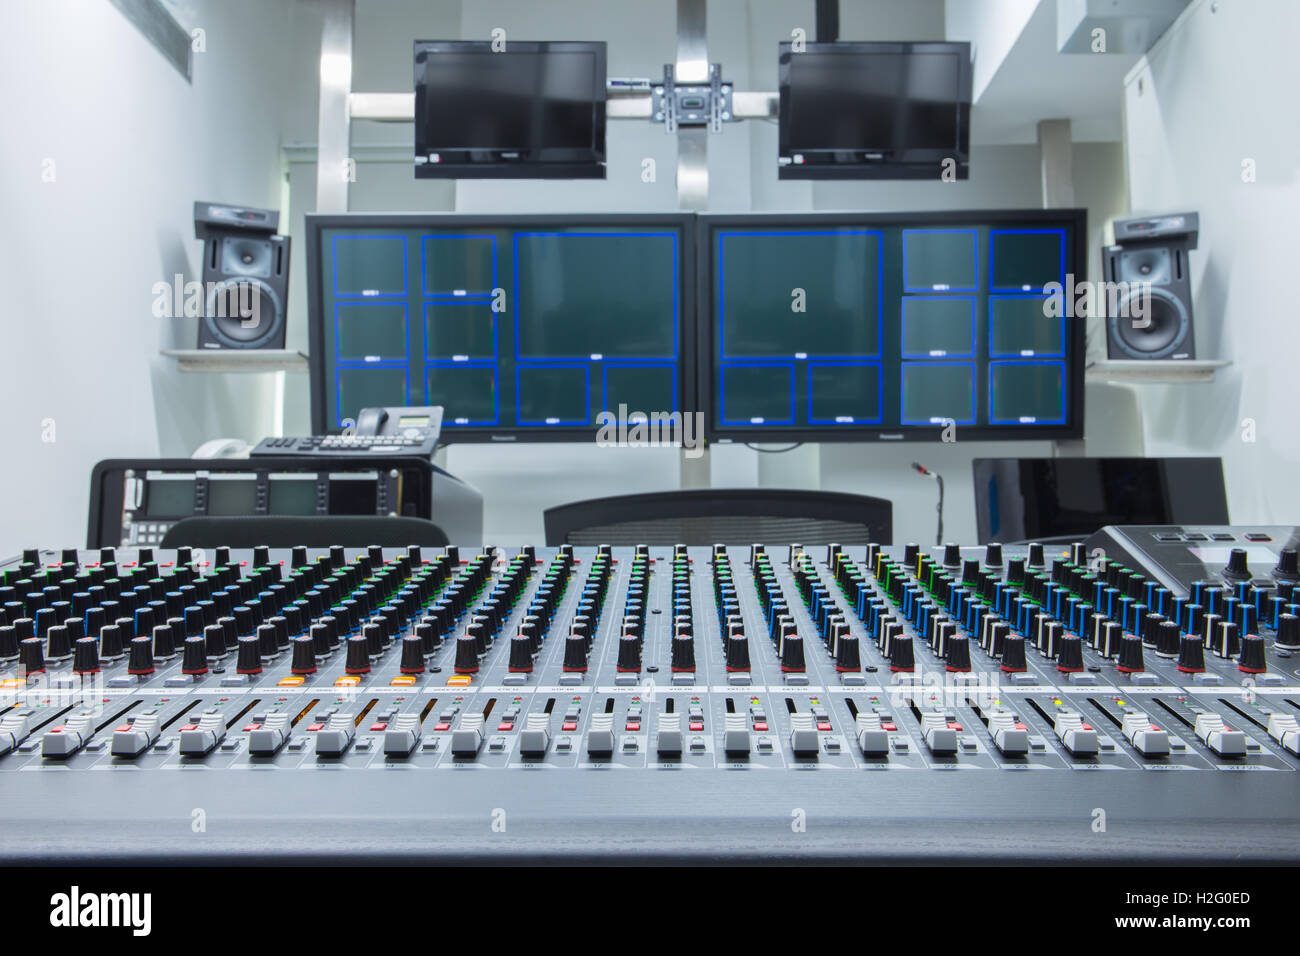 The control panel in the studio TV broadcasting. Stock Photo